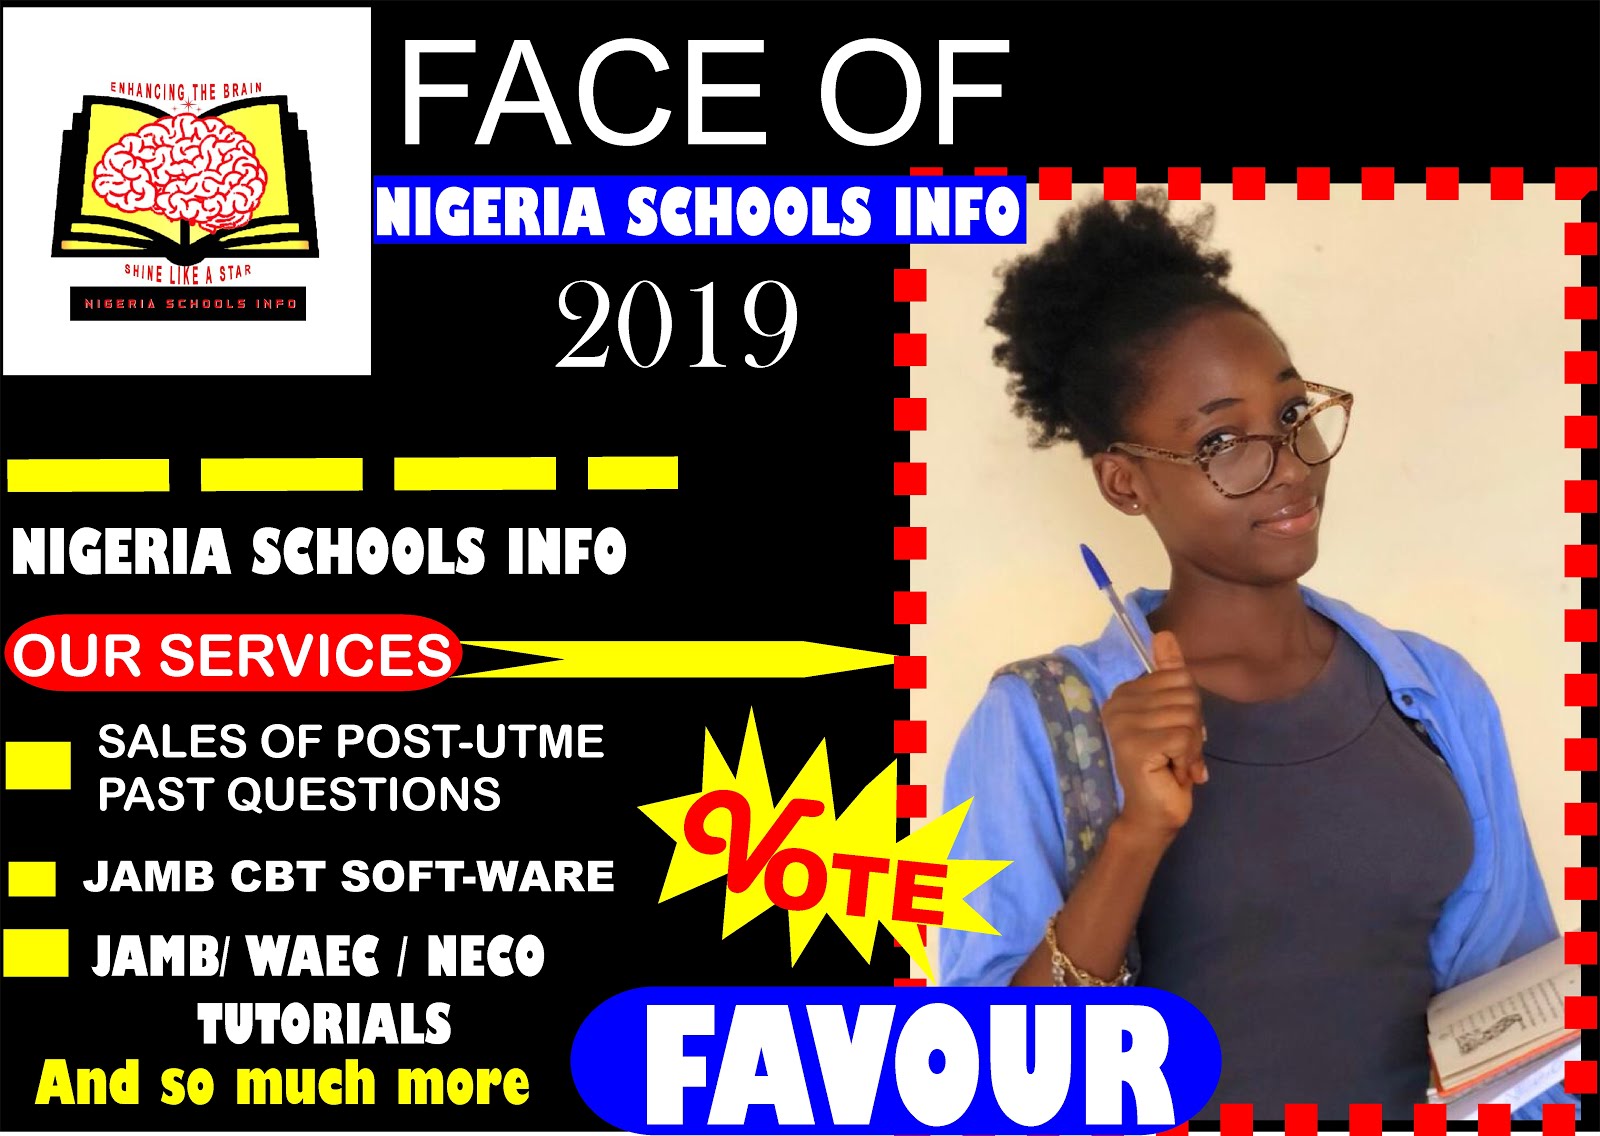 FACE OF NIGERIA SCHOOLS INFO 2019